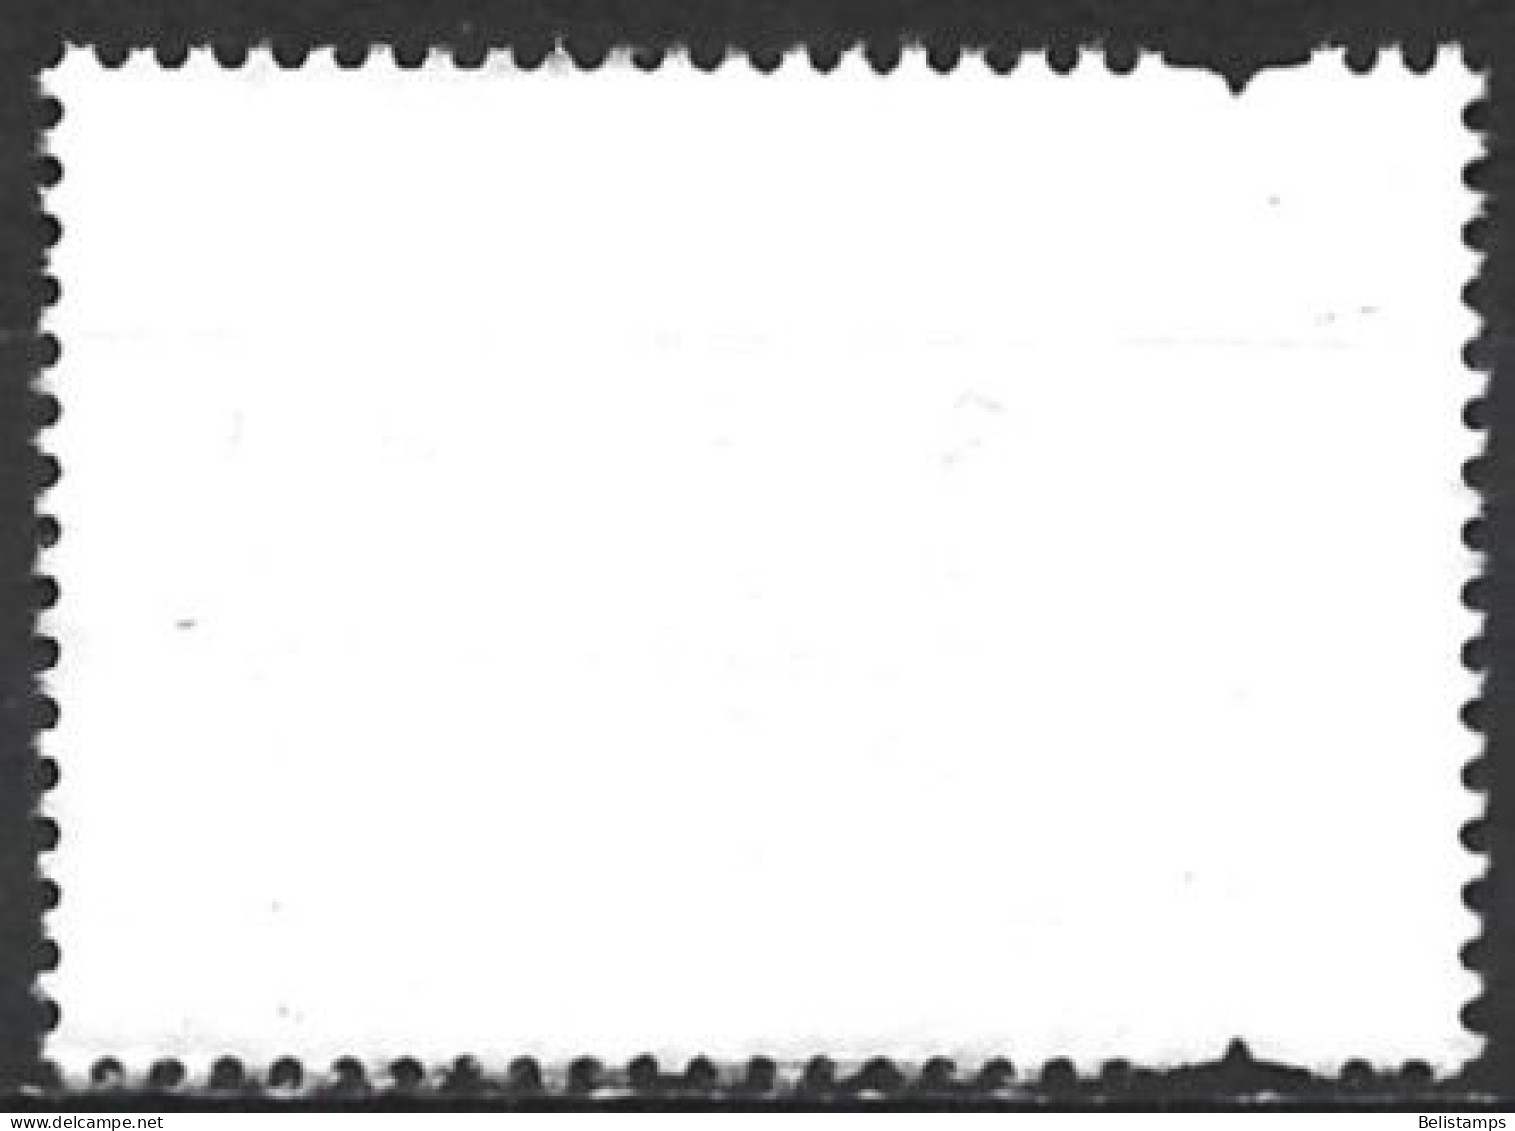 Argentina 2019. Scott #2889A (U) Monte Leòn, National Park - Used Stamps